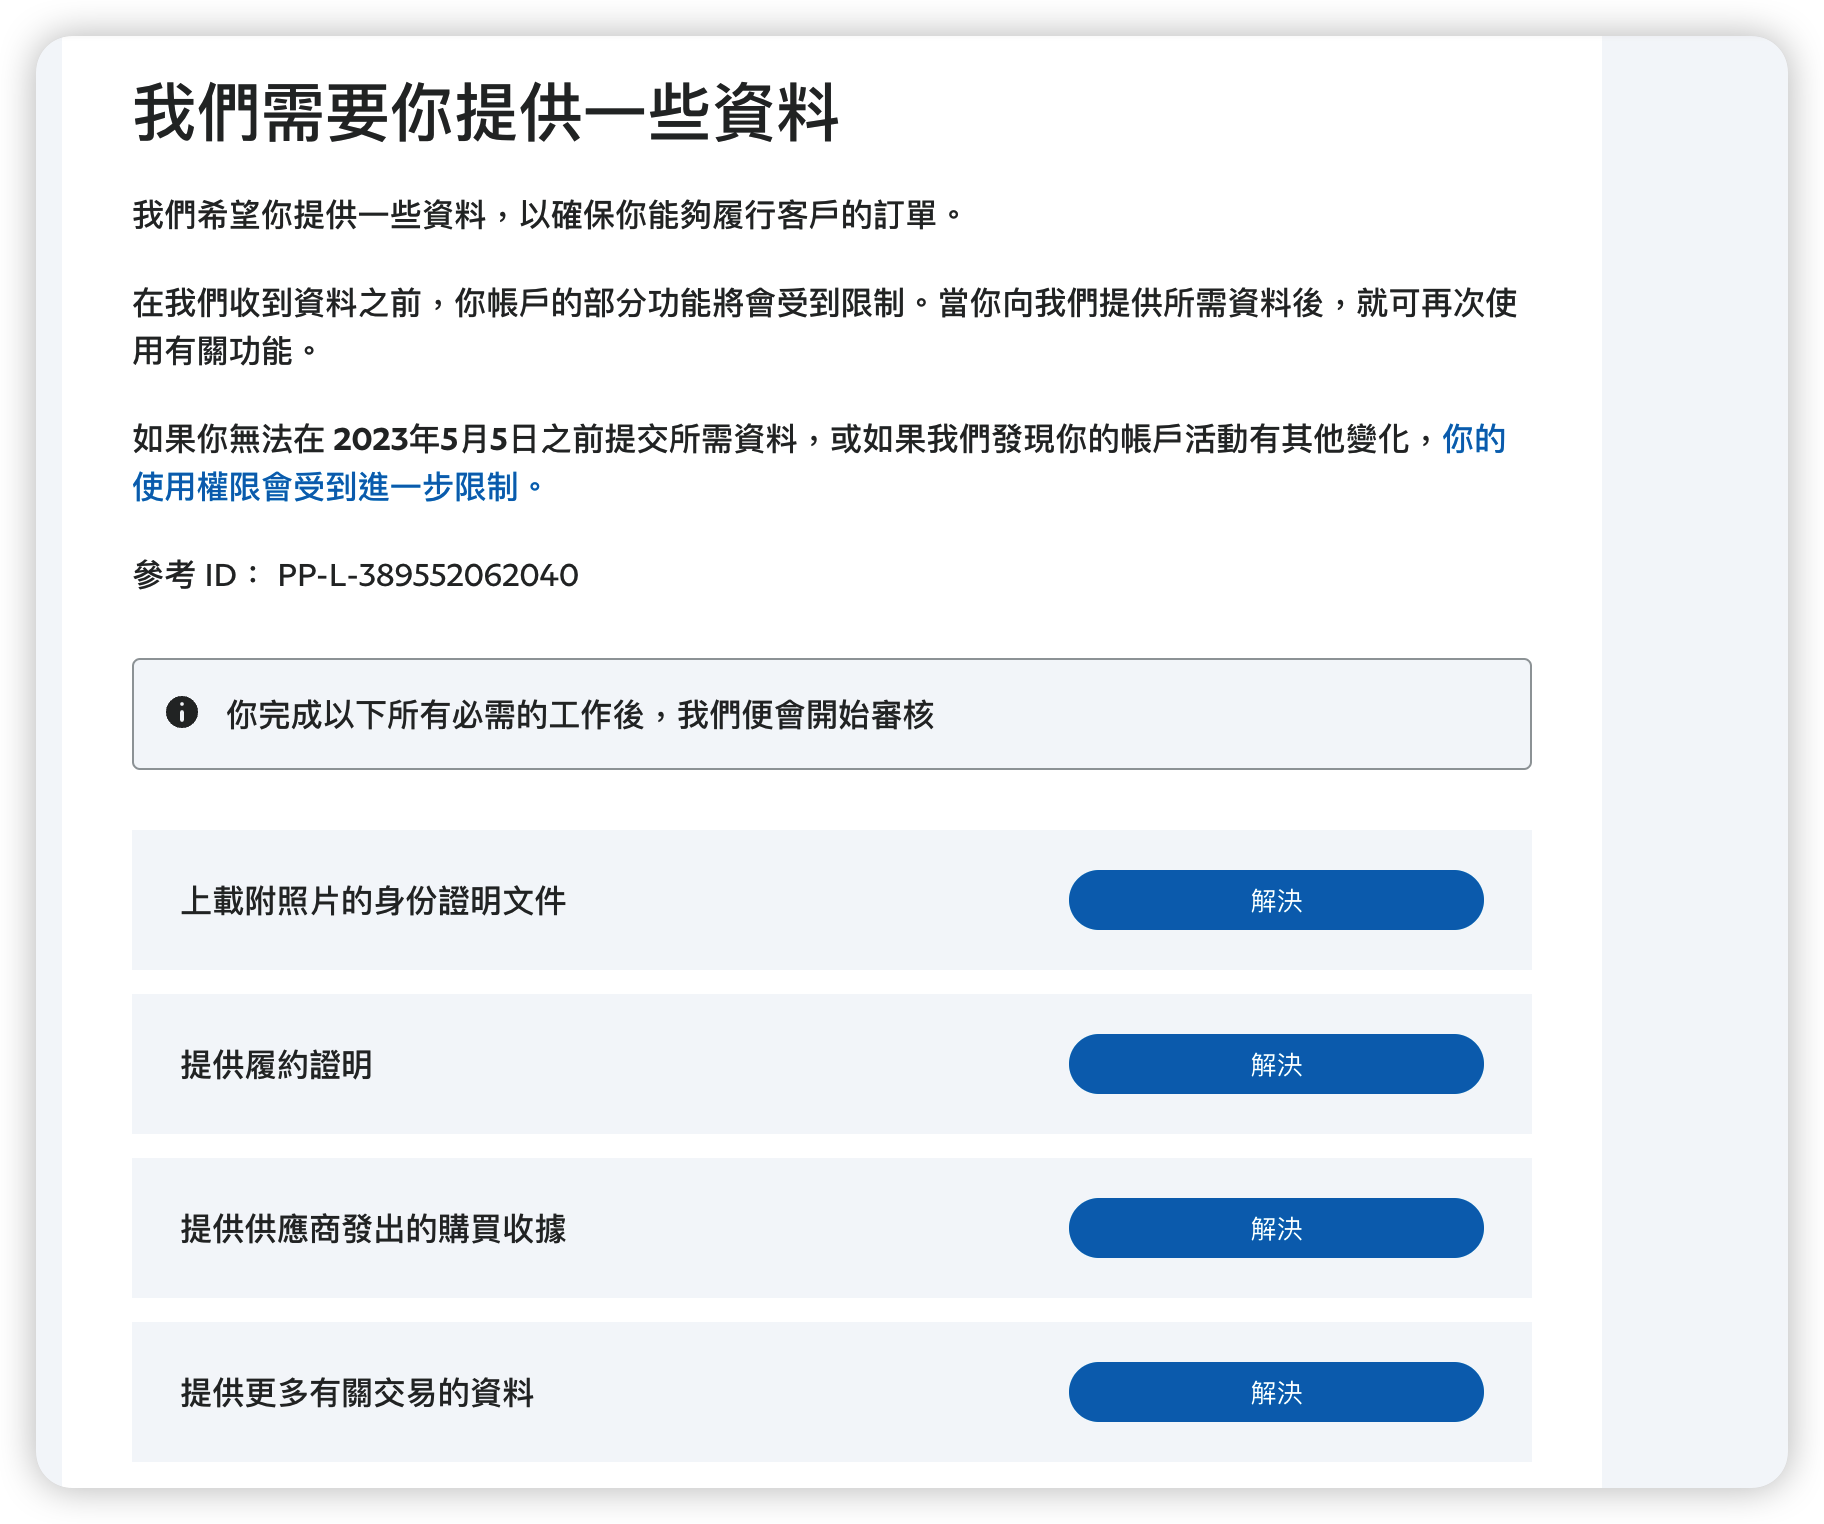 PayPal- HK验证-Helpayments